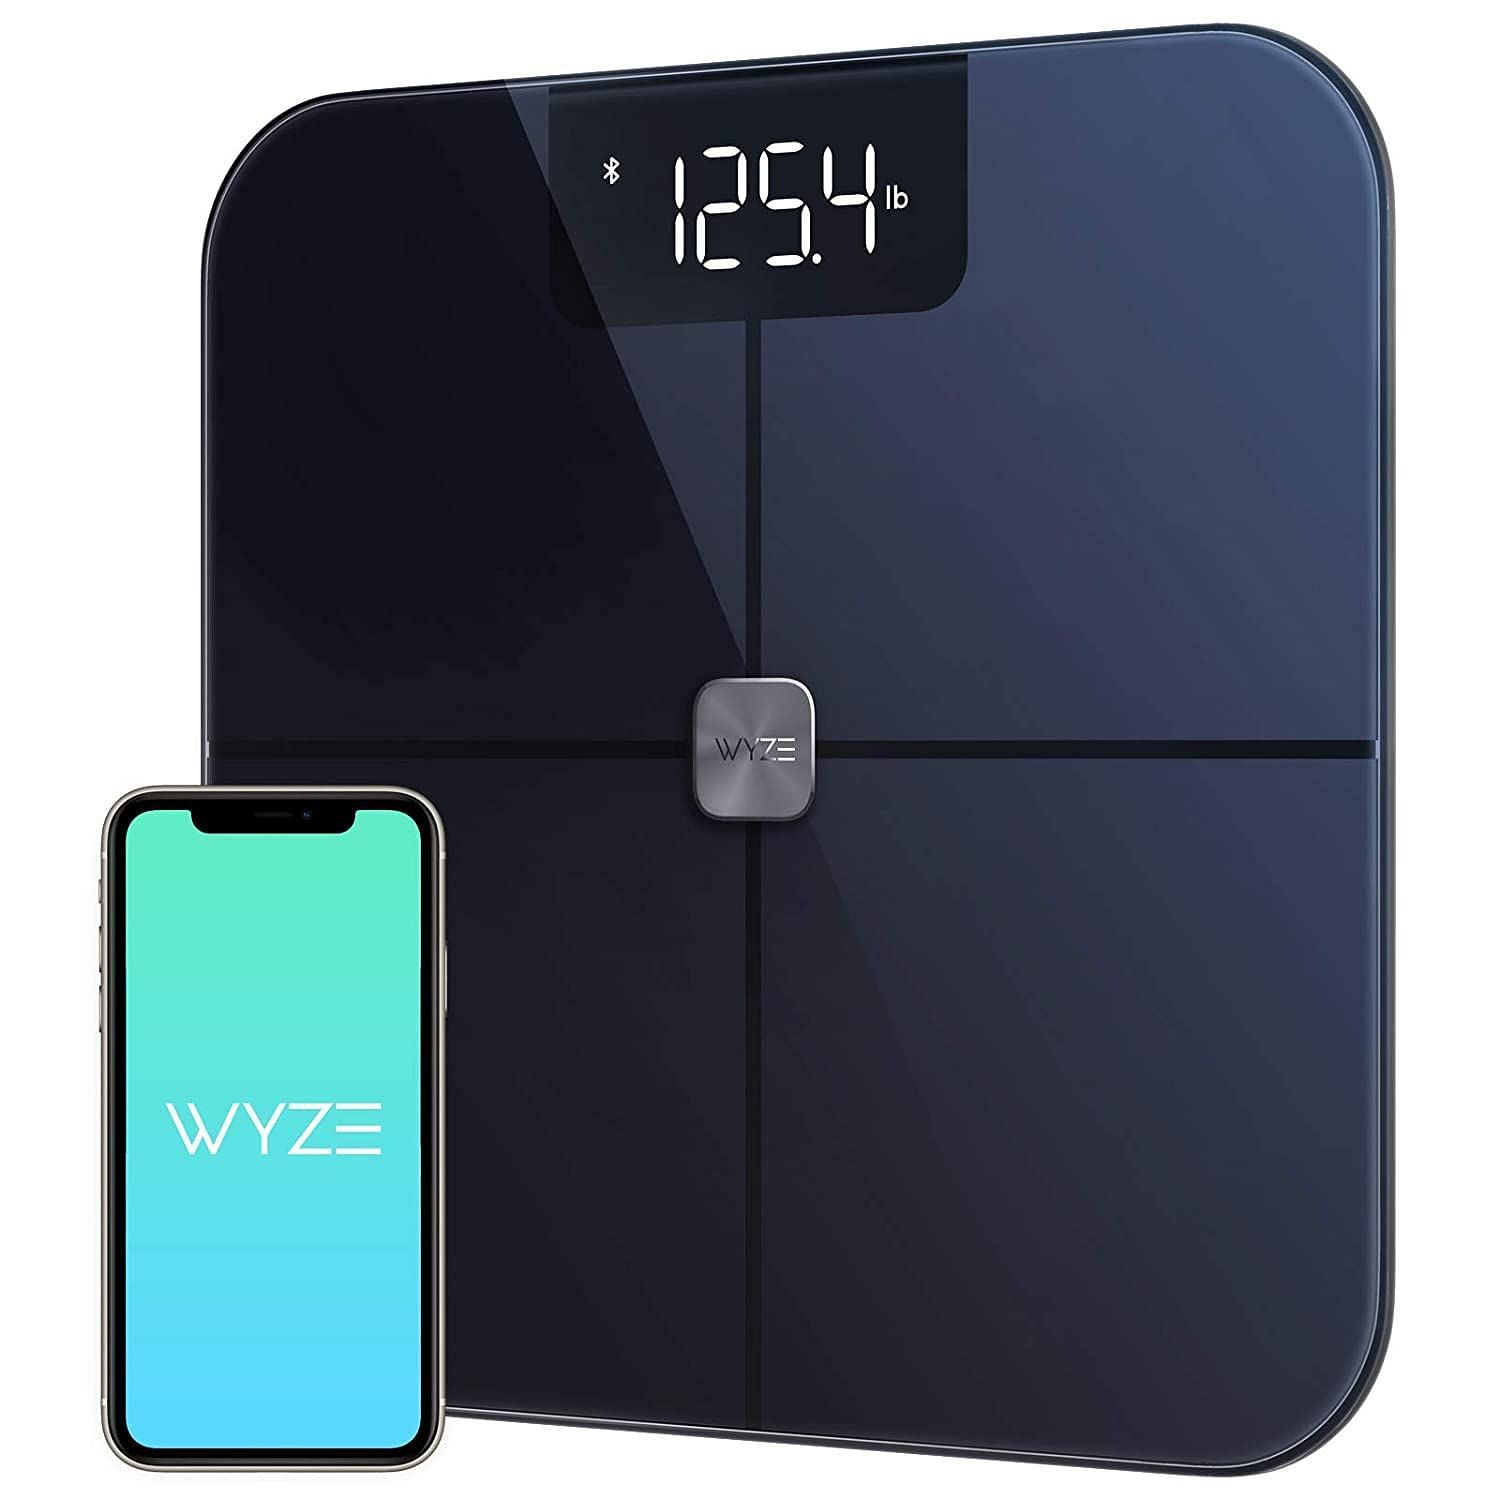 The Wyze Scale (Image via Amazon)